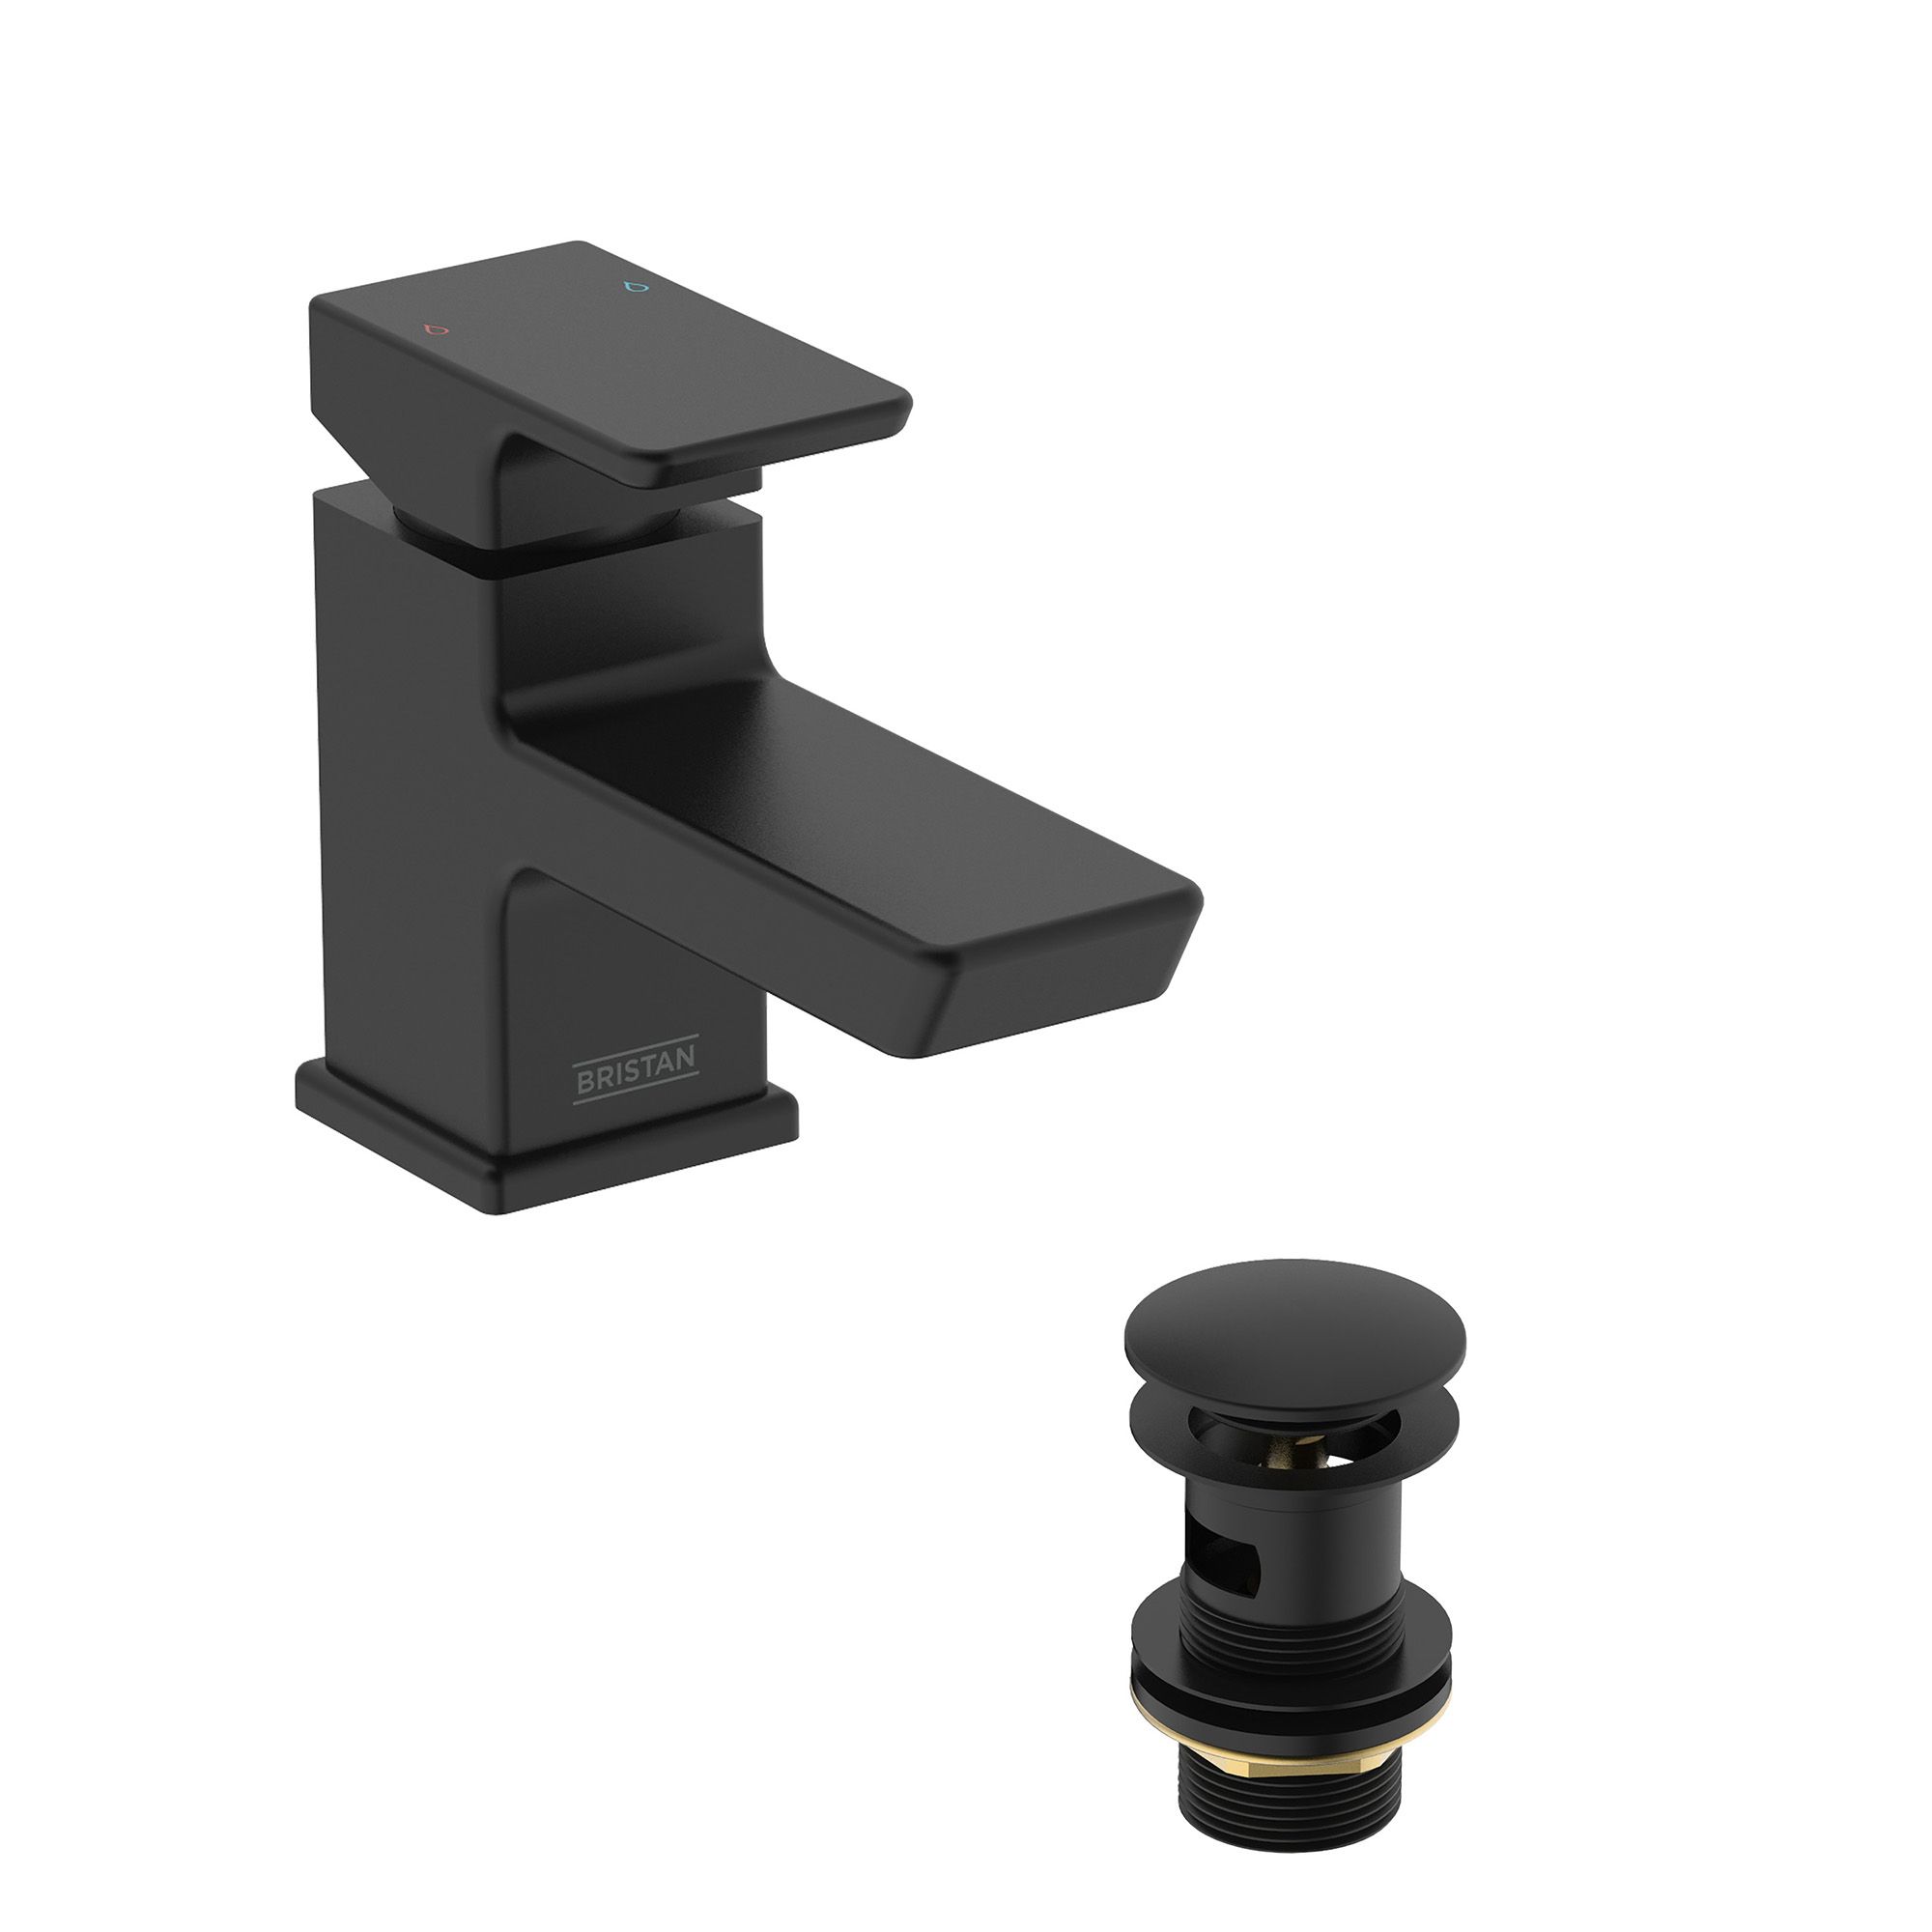 Bristan Noctis Small Black Square Deck-mounted Manual Deck Mixer Tap